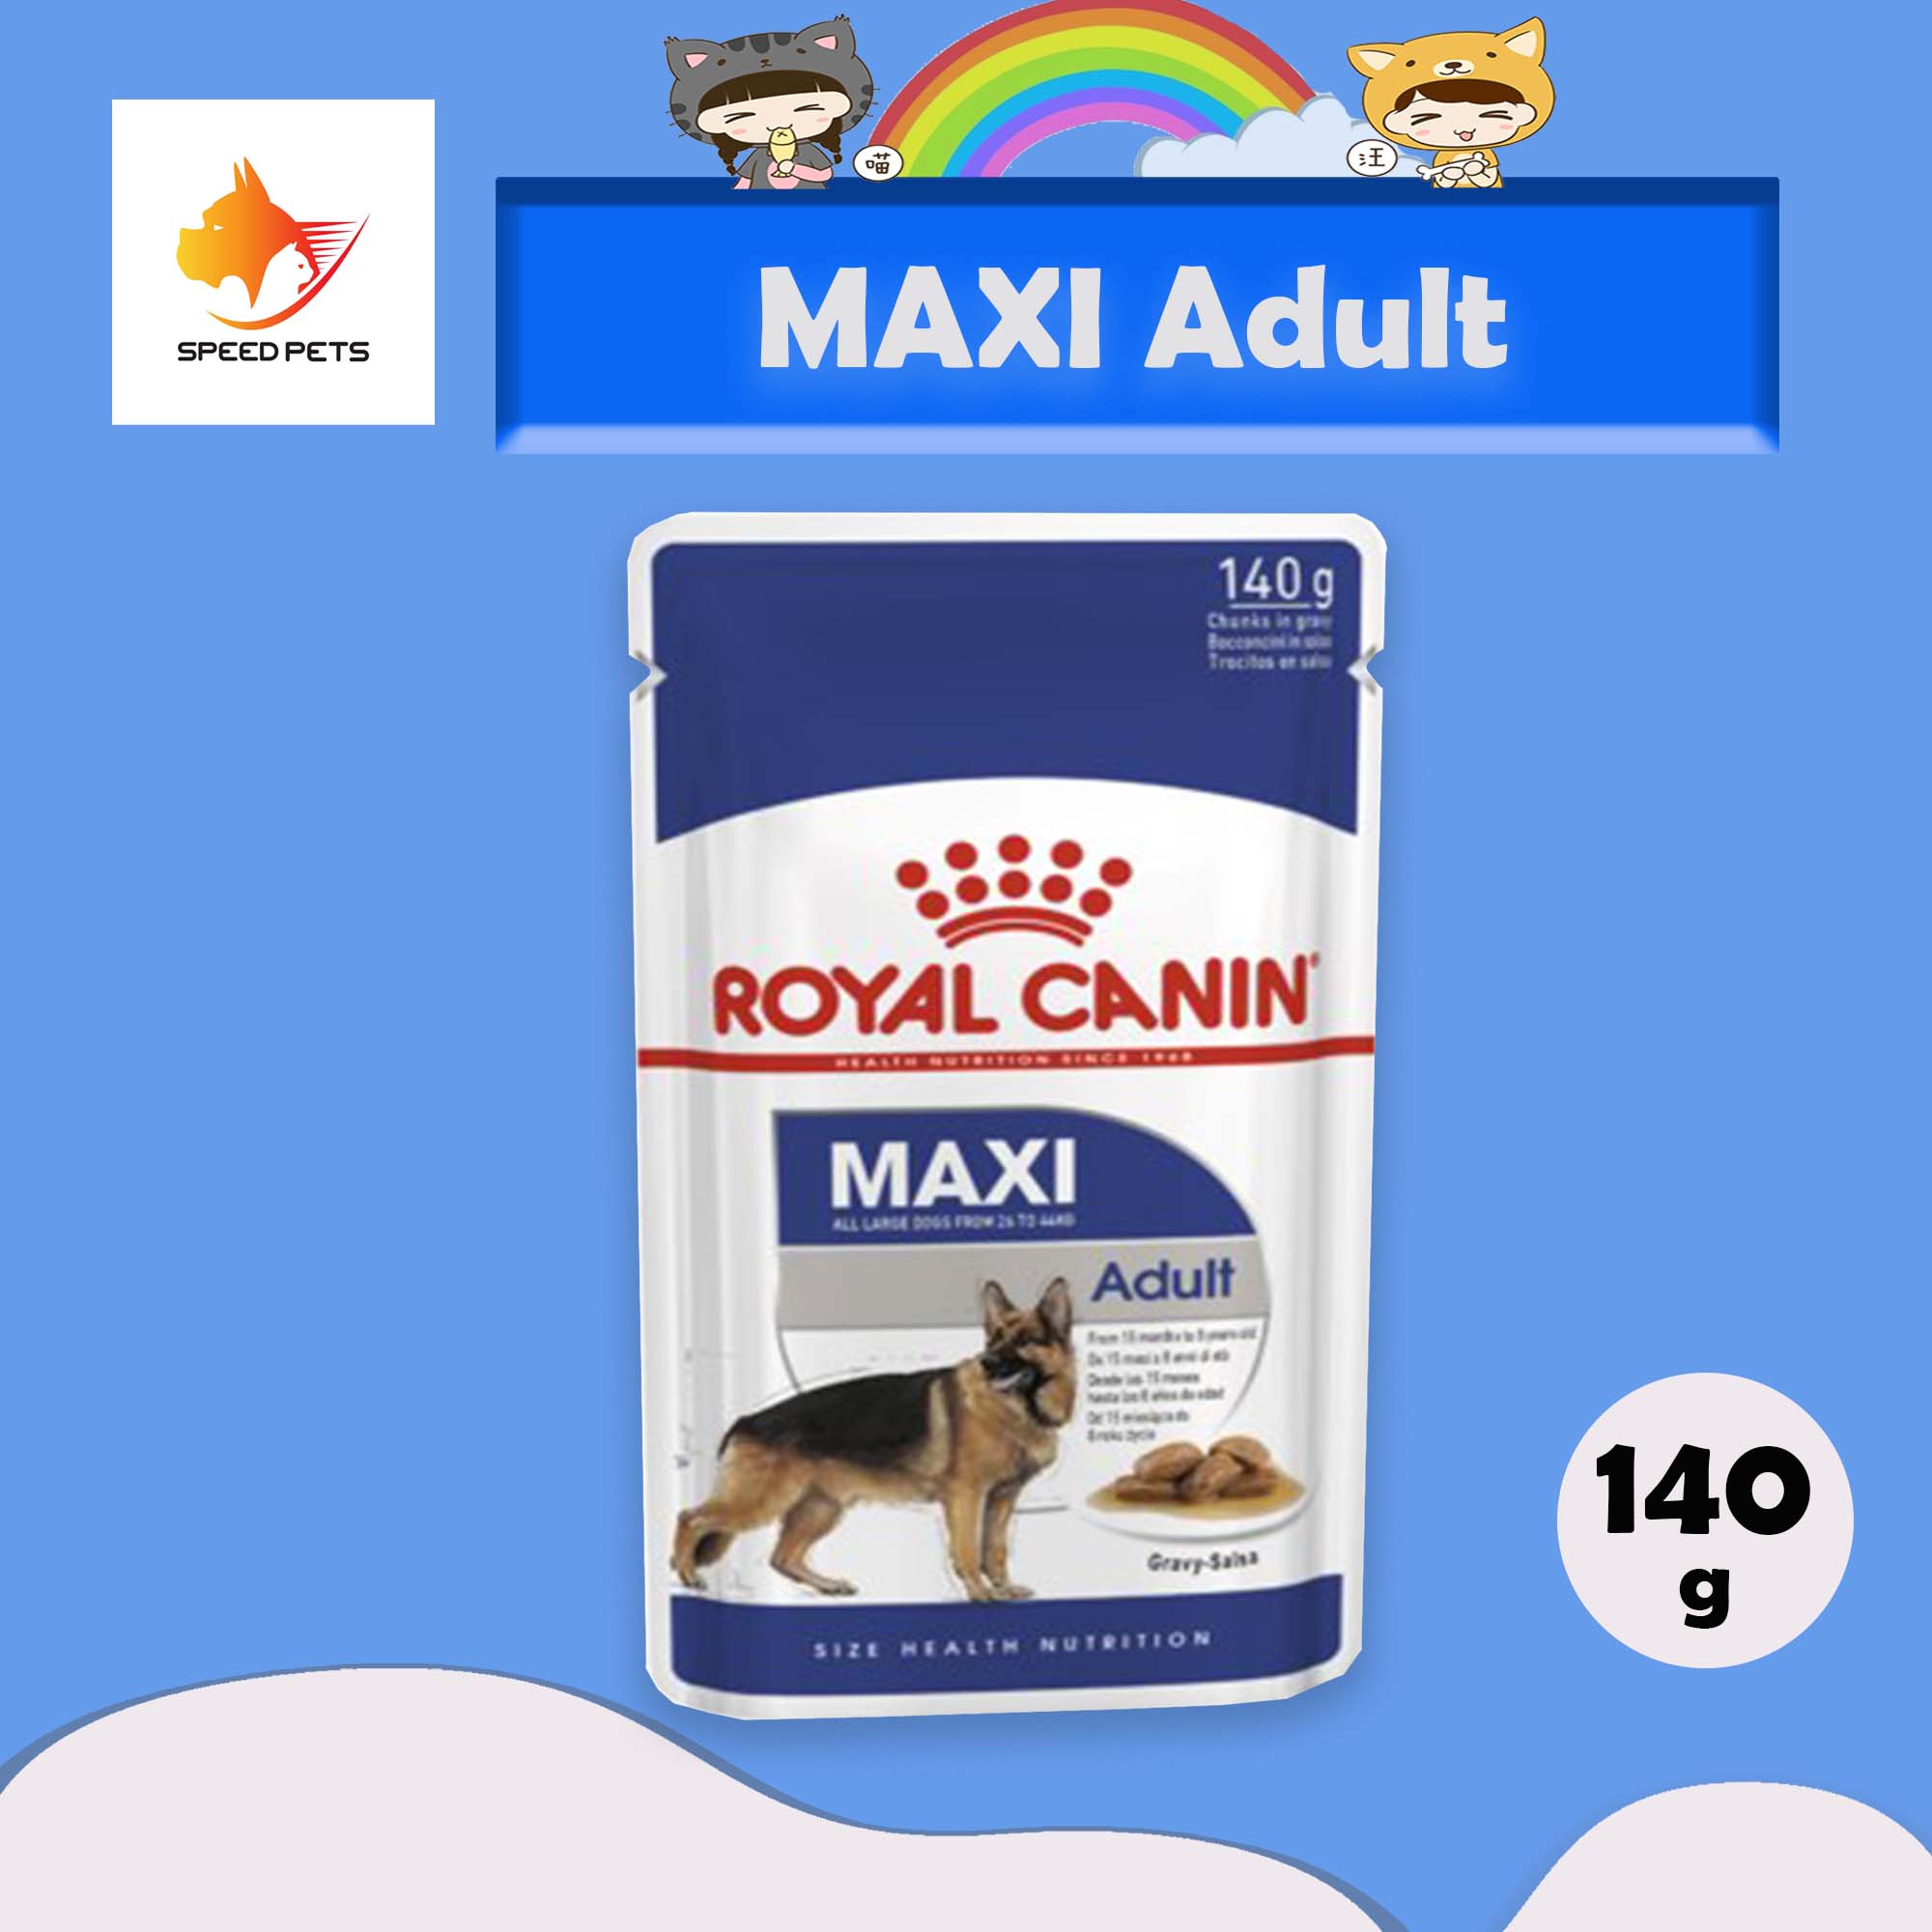 Royal Canin Maxi Adult Wet Dog Food Pouches โรยัล คานิน อาหารเปียก สุนัขโต พันธุ์ใหญ่ แบบซอง ขนาด 140g